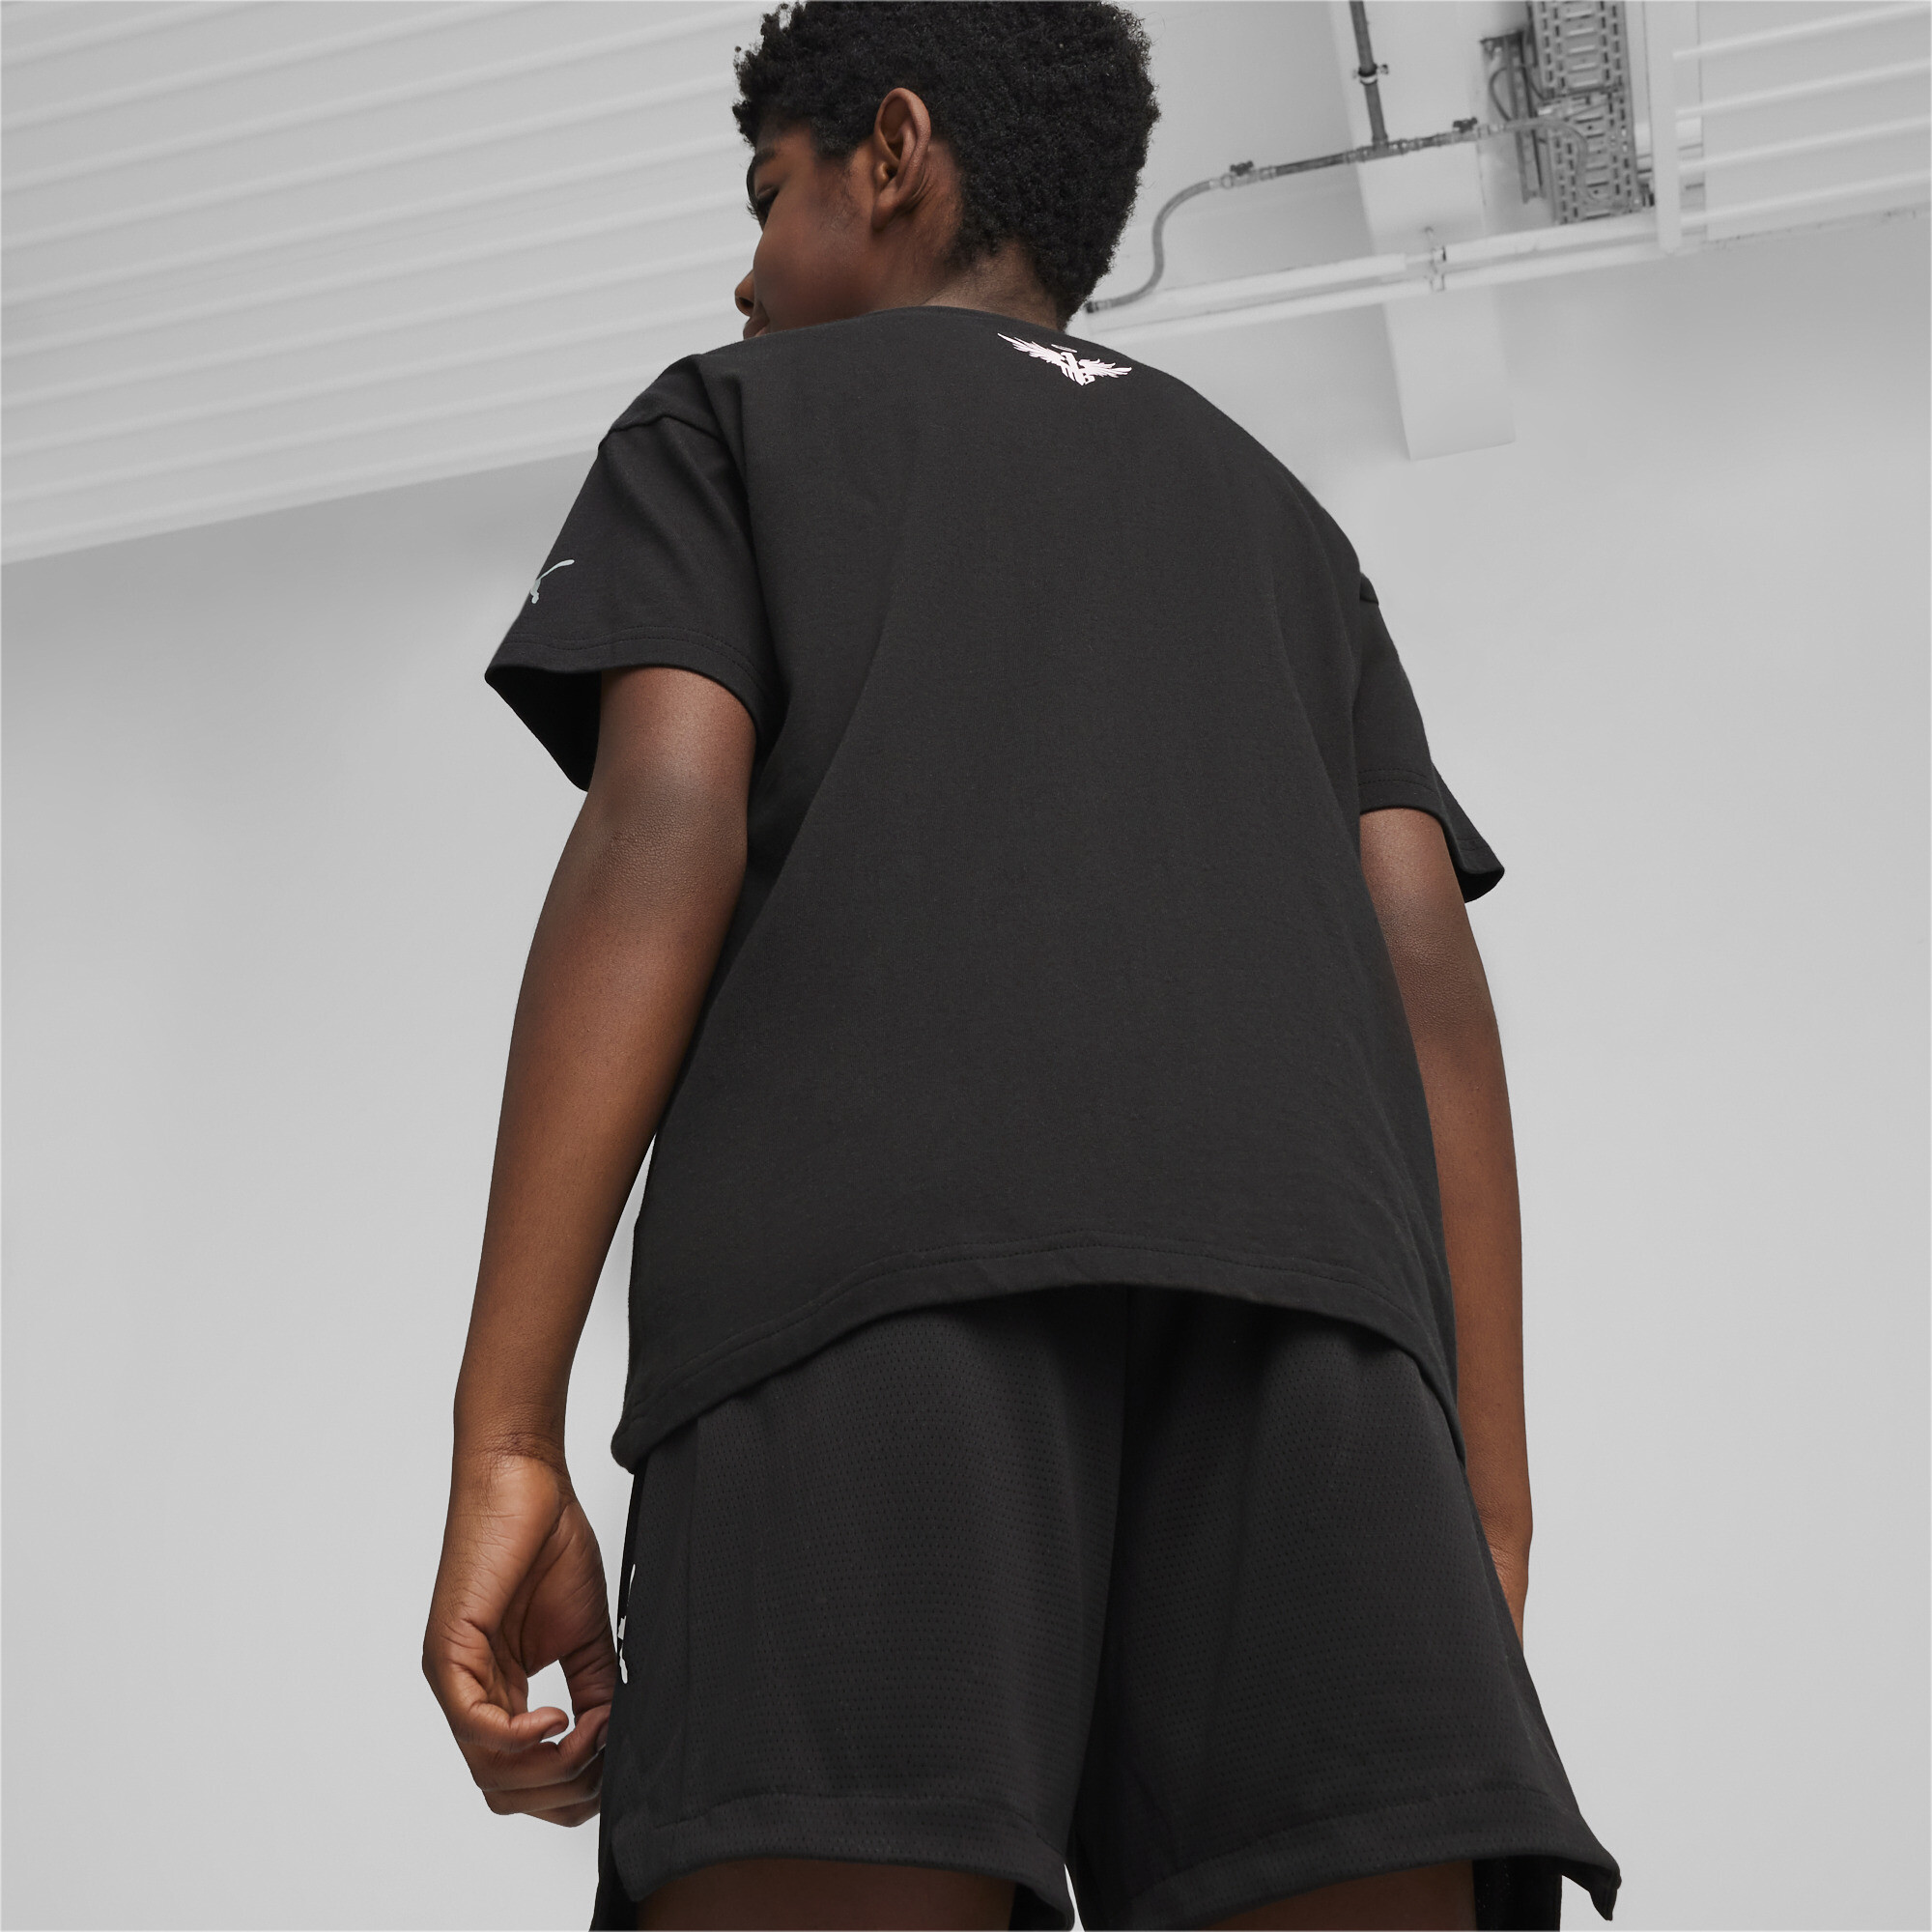 Puma MELO IRIDESCENT Boys' T-Shirt, Black, Size 13-14Y, Age